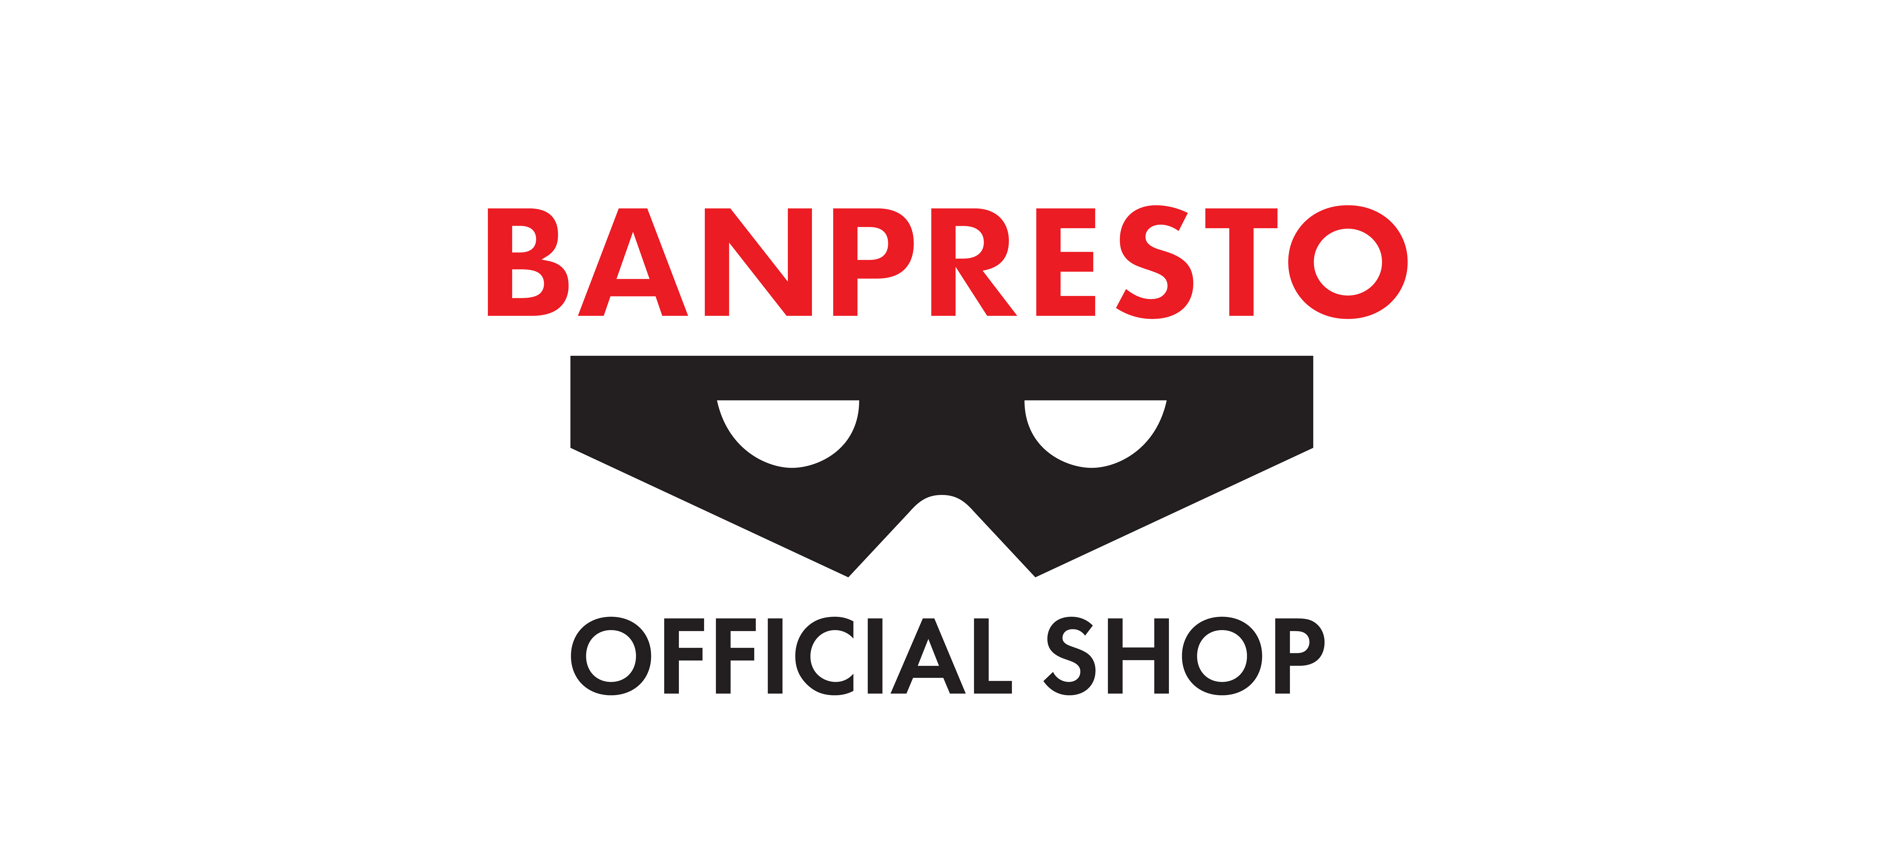 Banpresto  Bandai Namco Cross Store